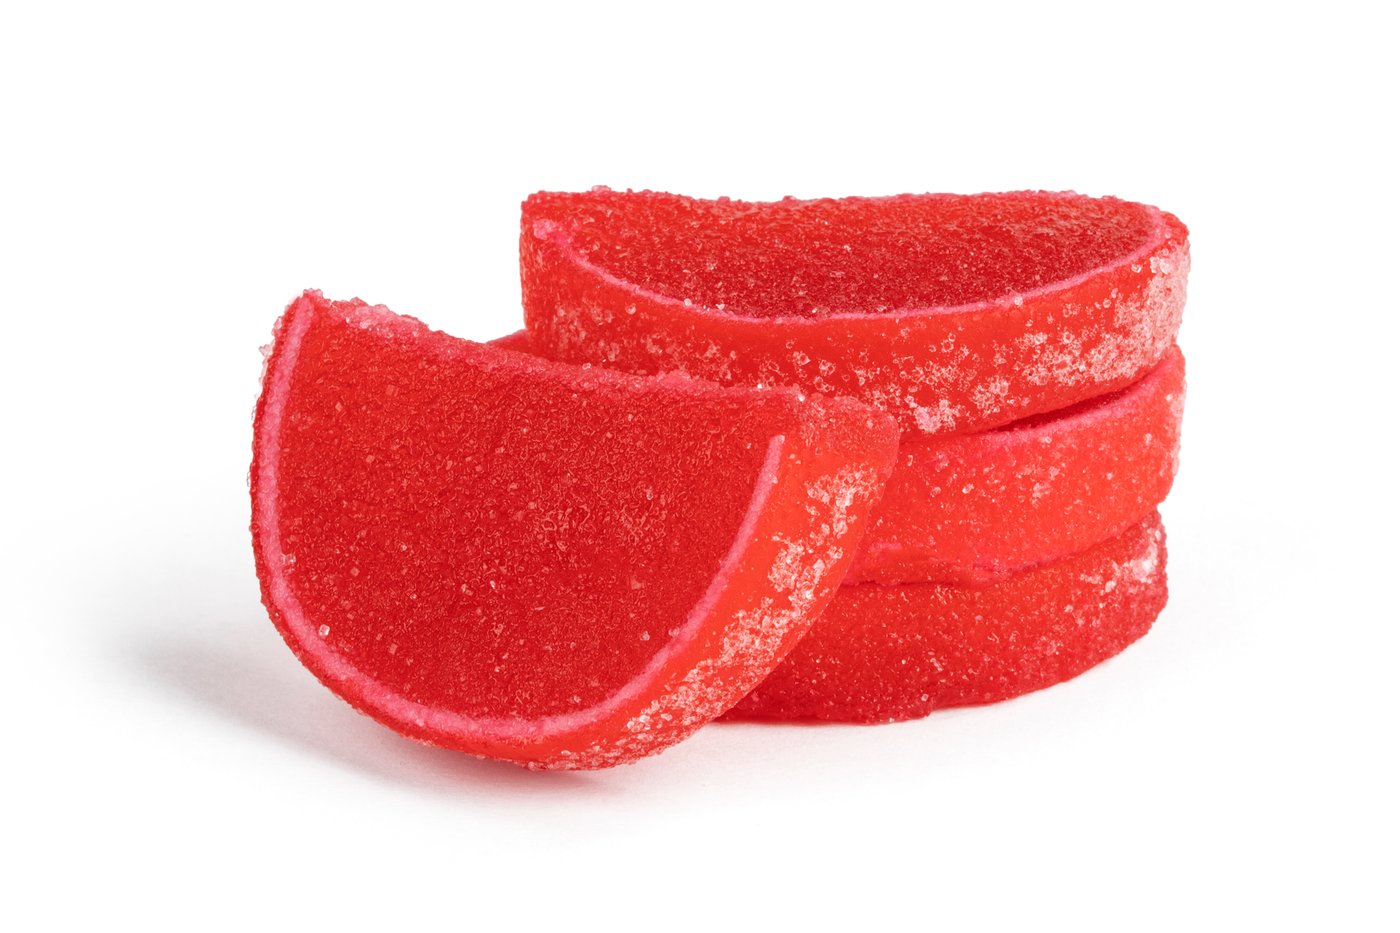 Red Raspberry Fruit Slices image zoom